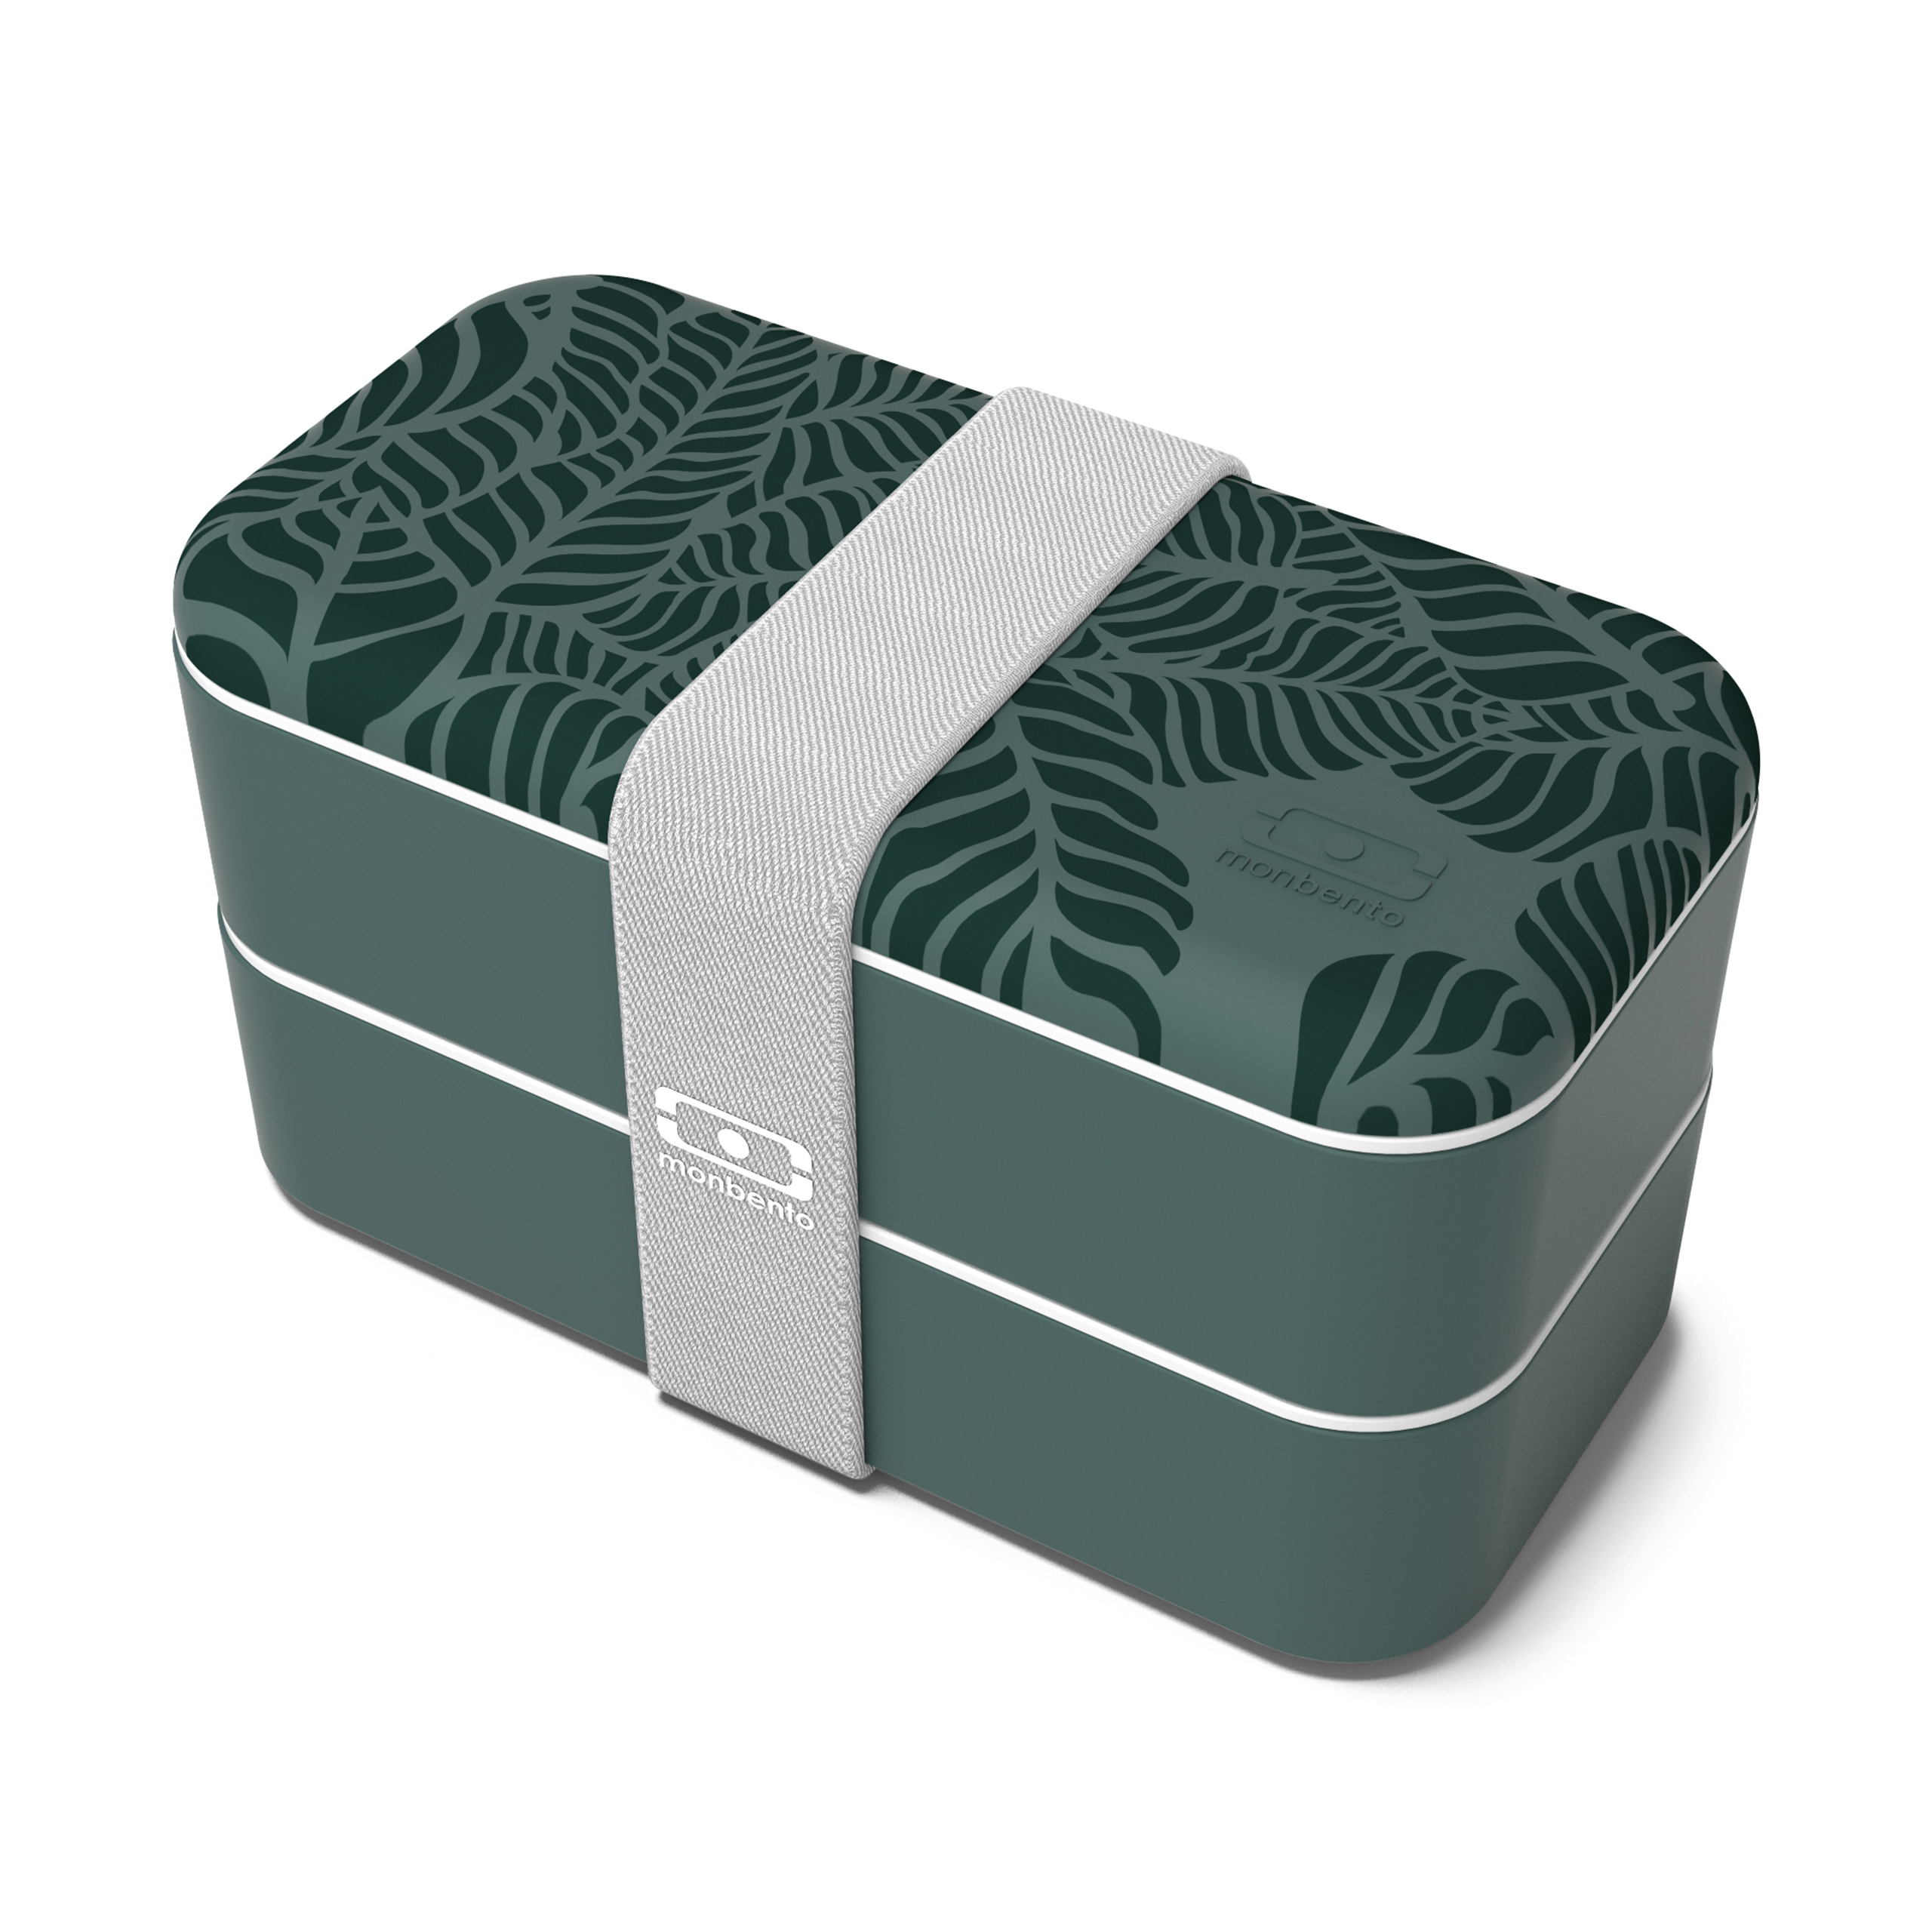 Bentobox / Lunchbox "MB Original Jungle"